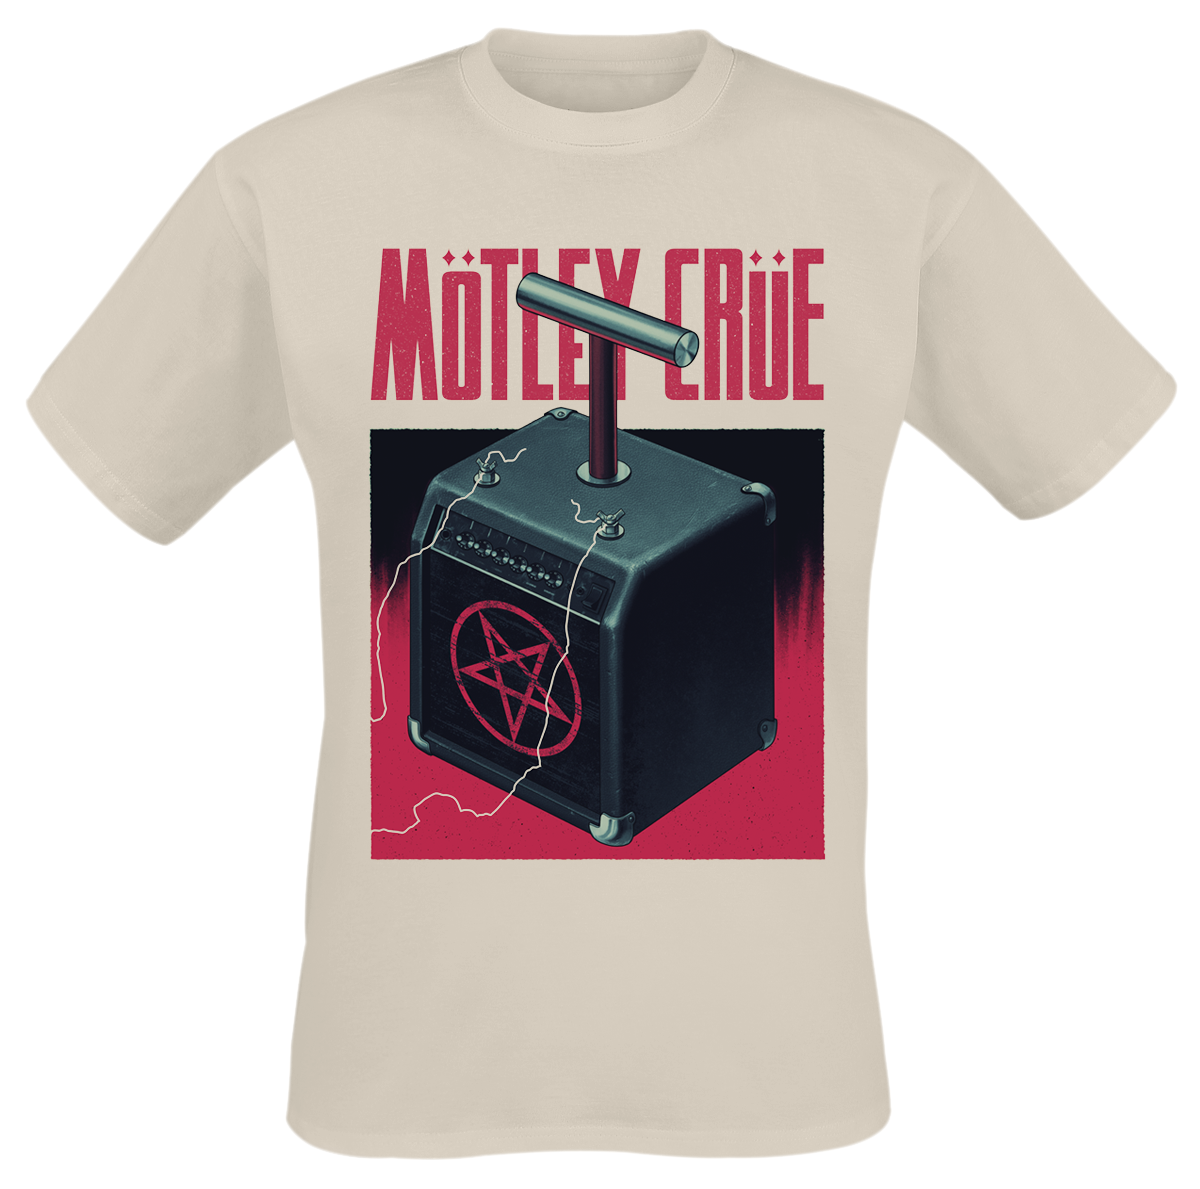 Mötley Crüe - Atlanta - T-Shirt - sand